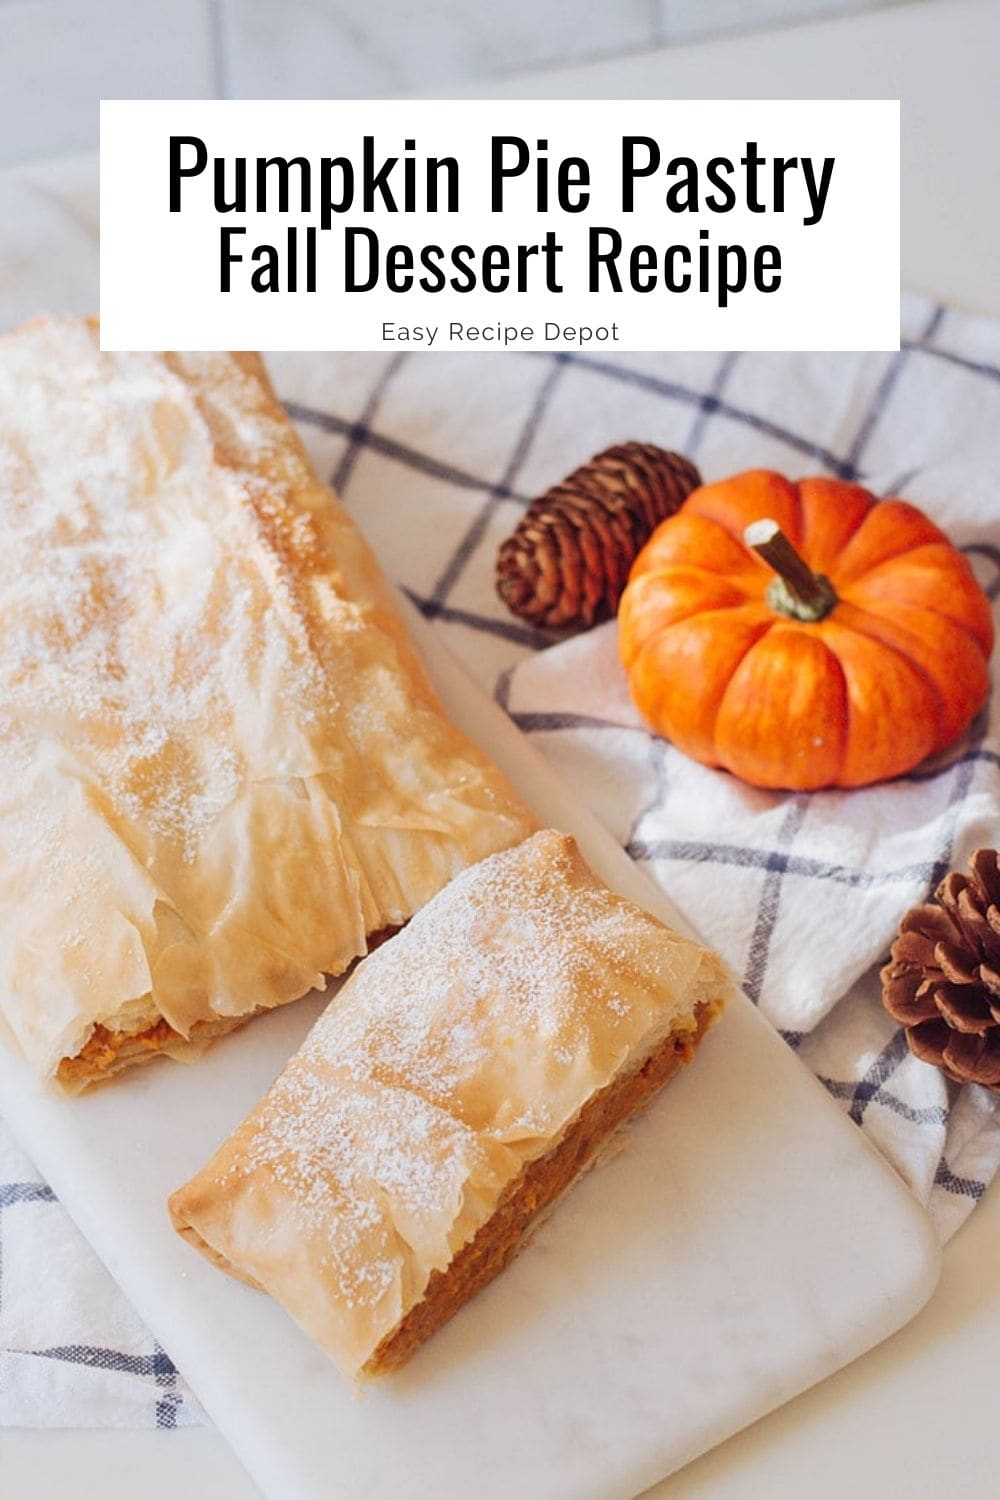 Pumpkin pie pastry fall dessert recipe.